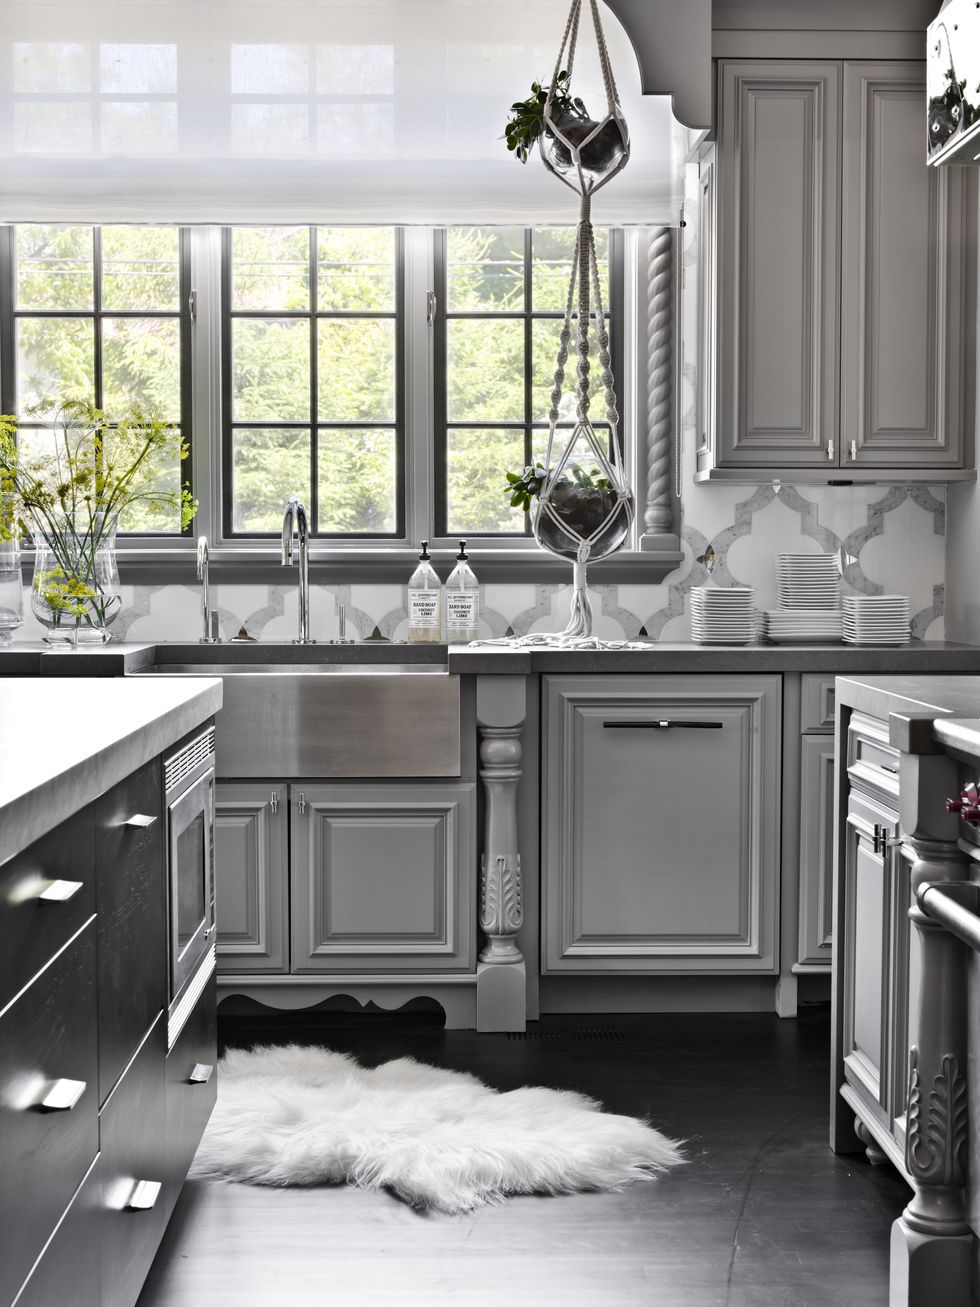 20 Eye-Catching Kitchen Tile Backsplash Ideas to Love